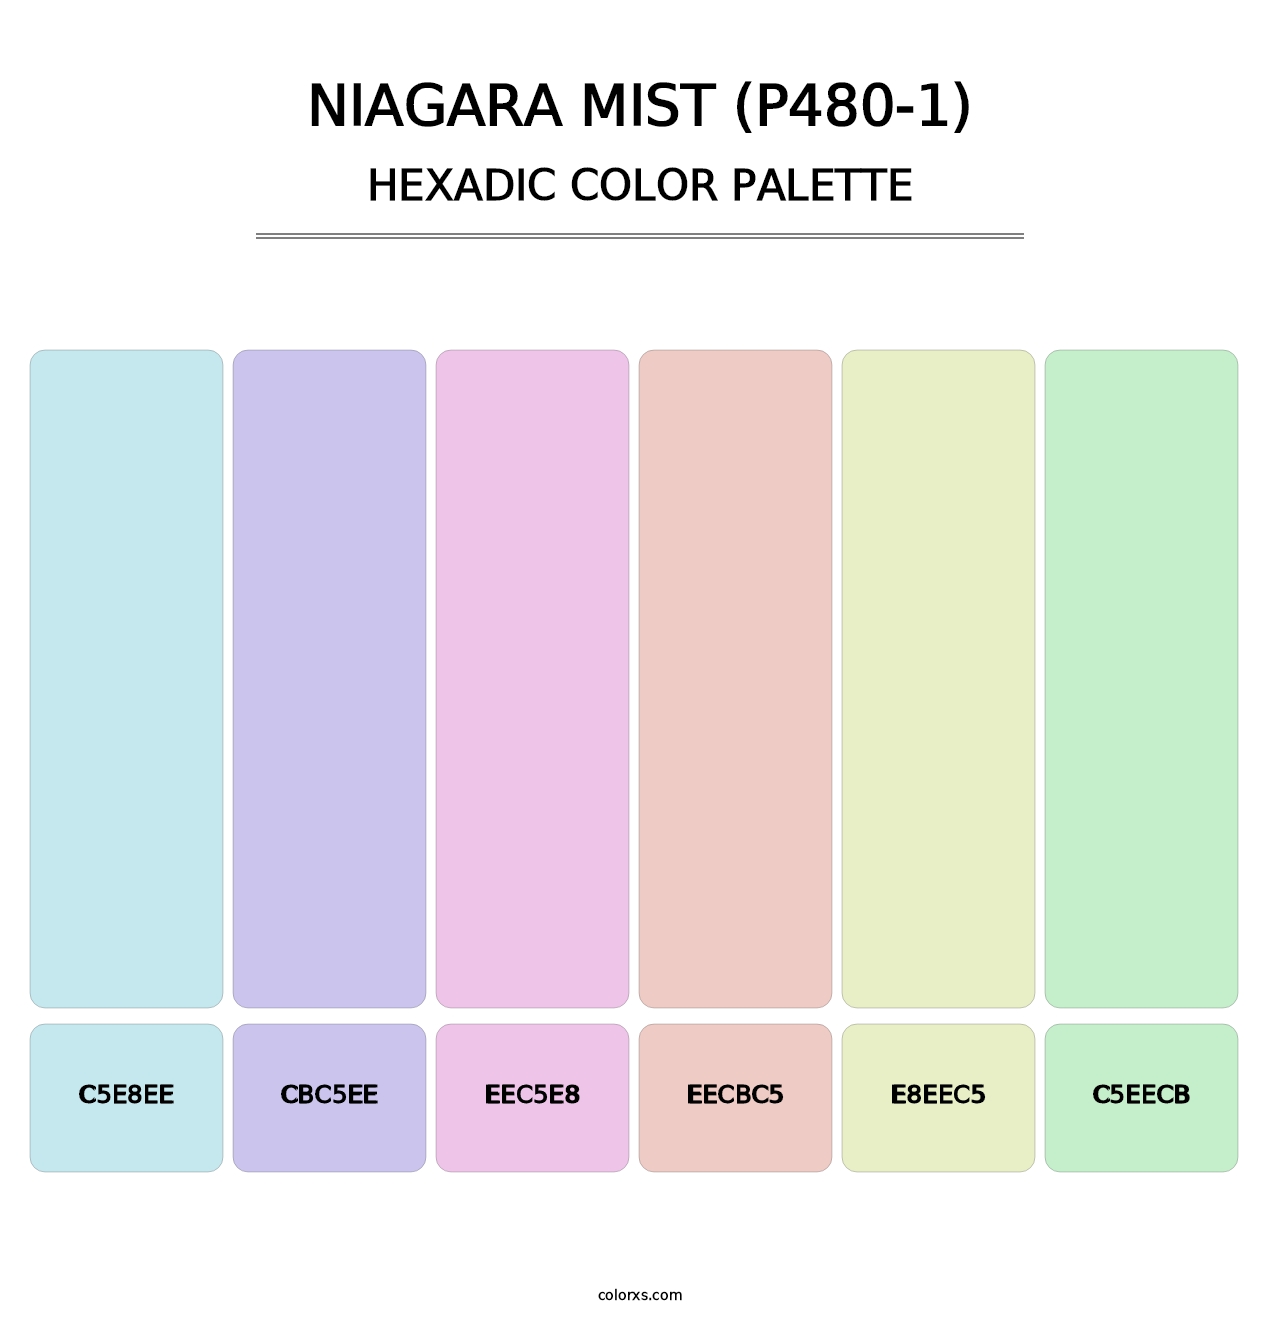 Niagara Mist (P480-1) - Hexadic Color Palette